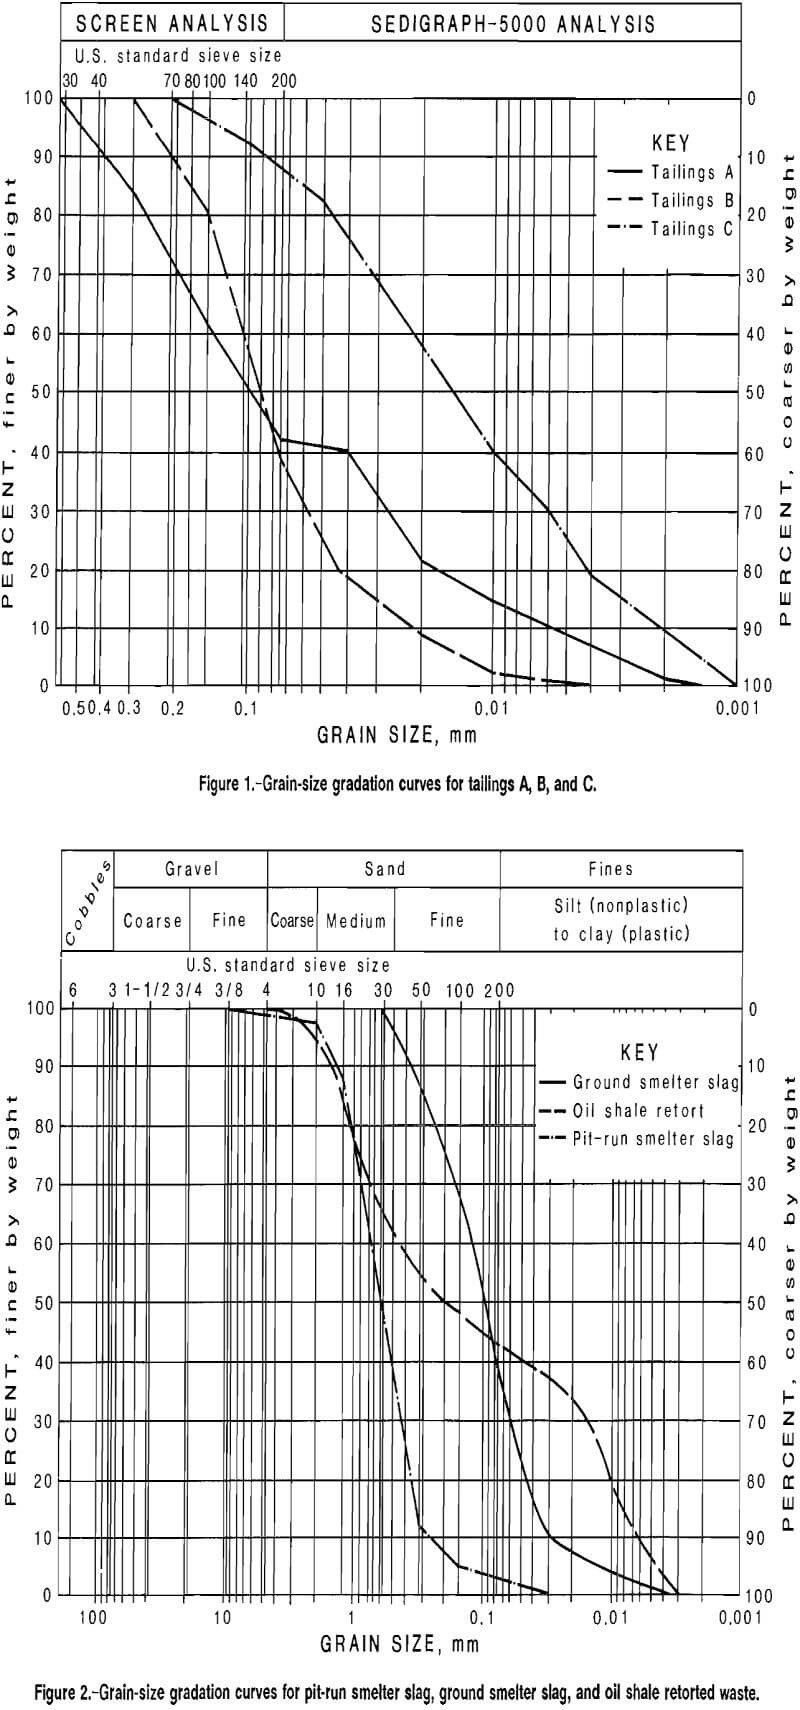 total tailings grain size gradation curves